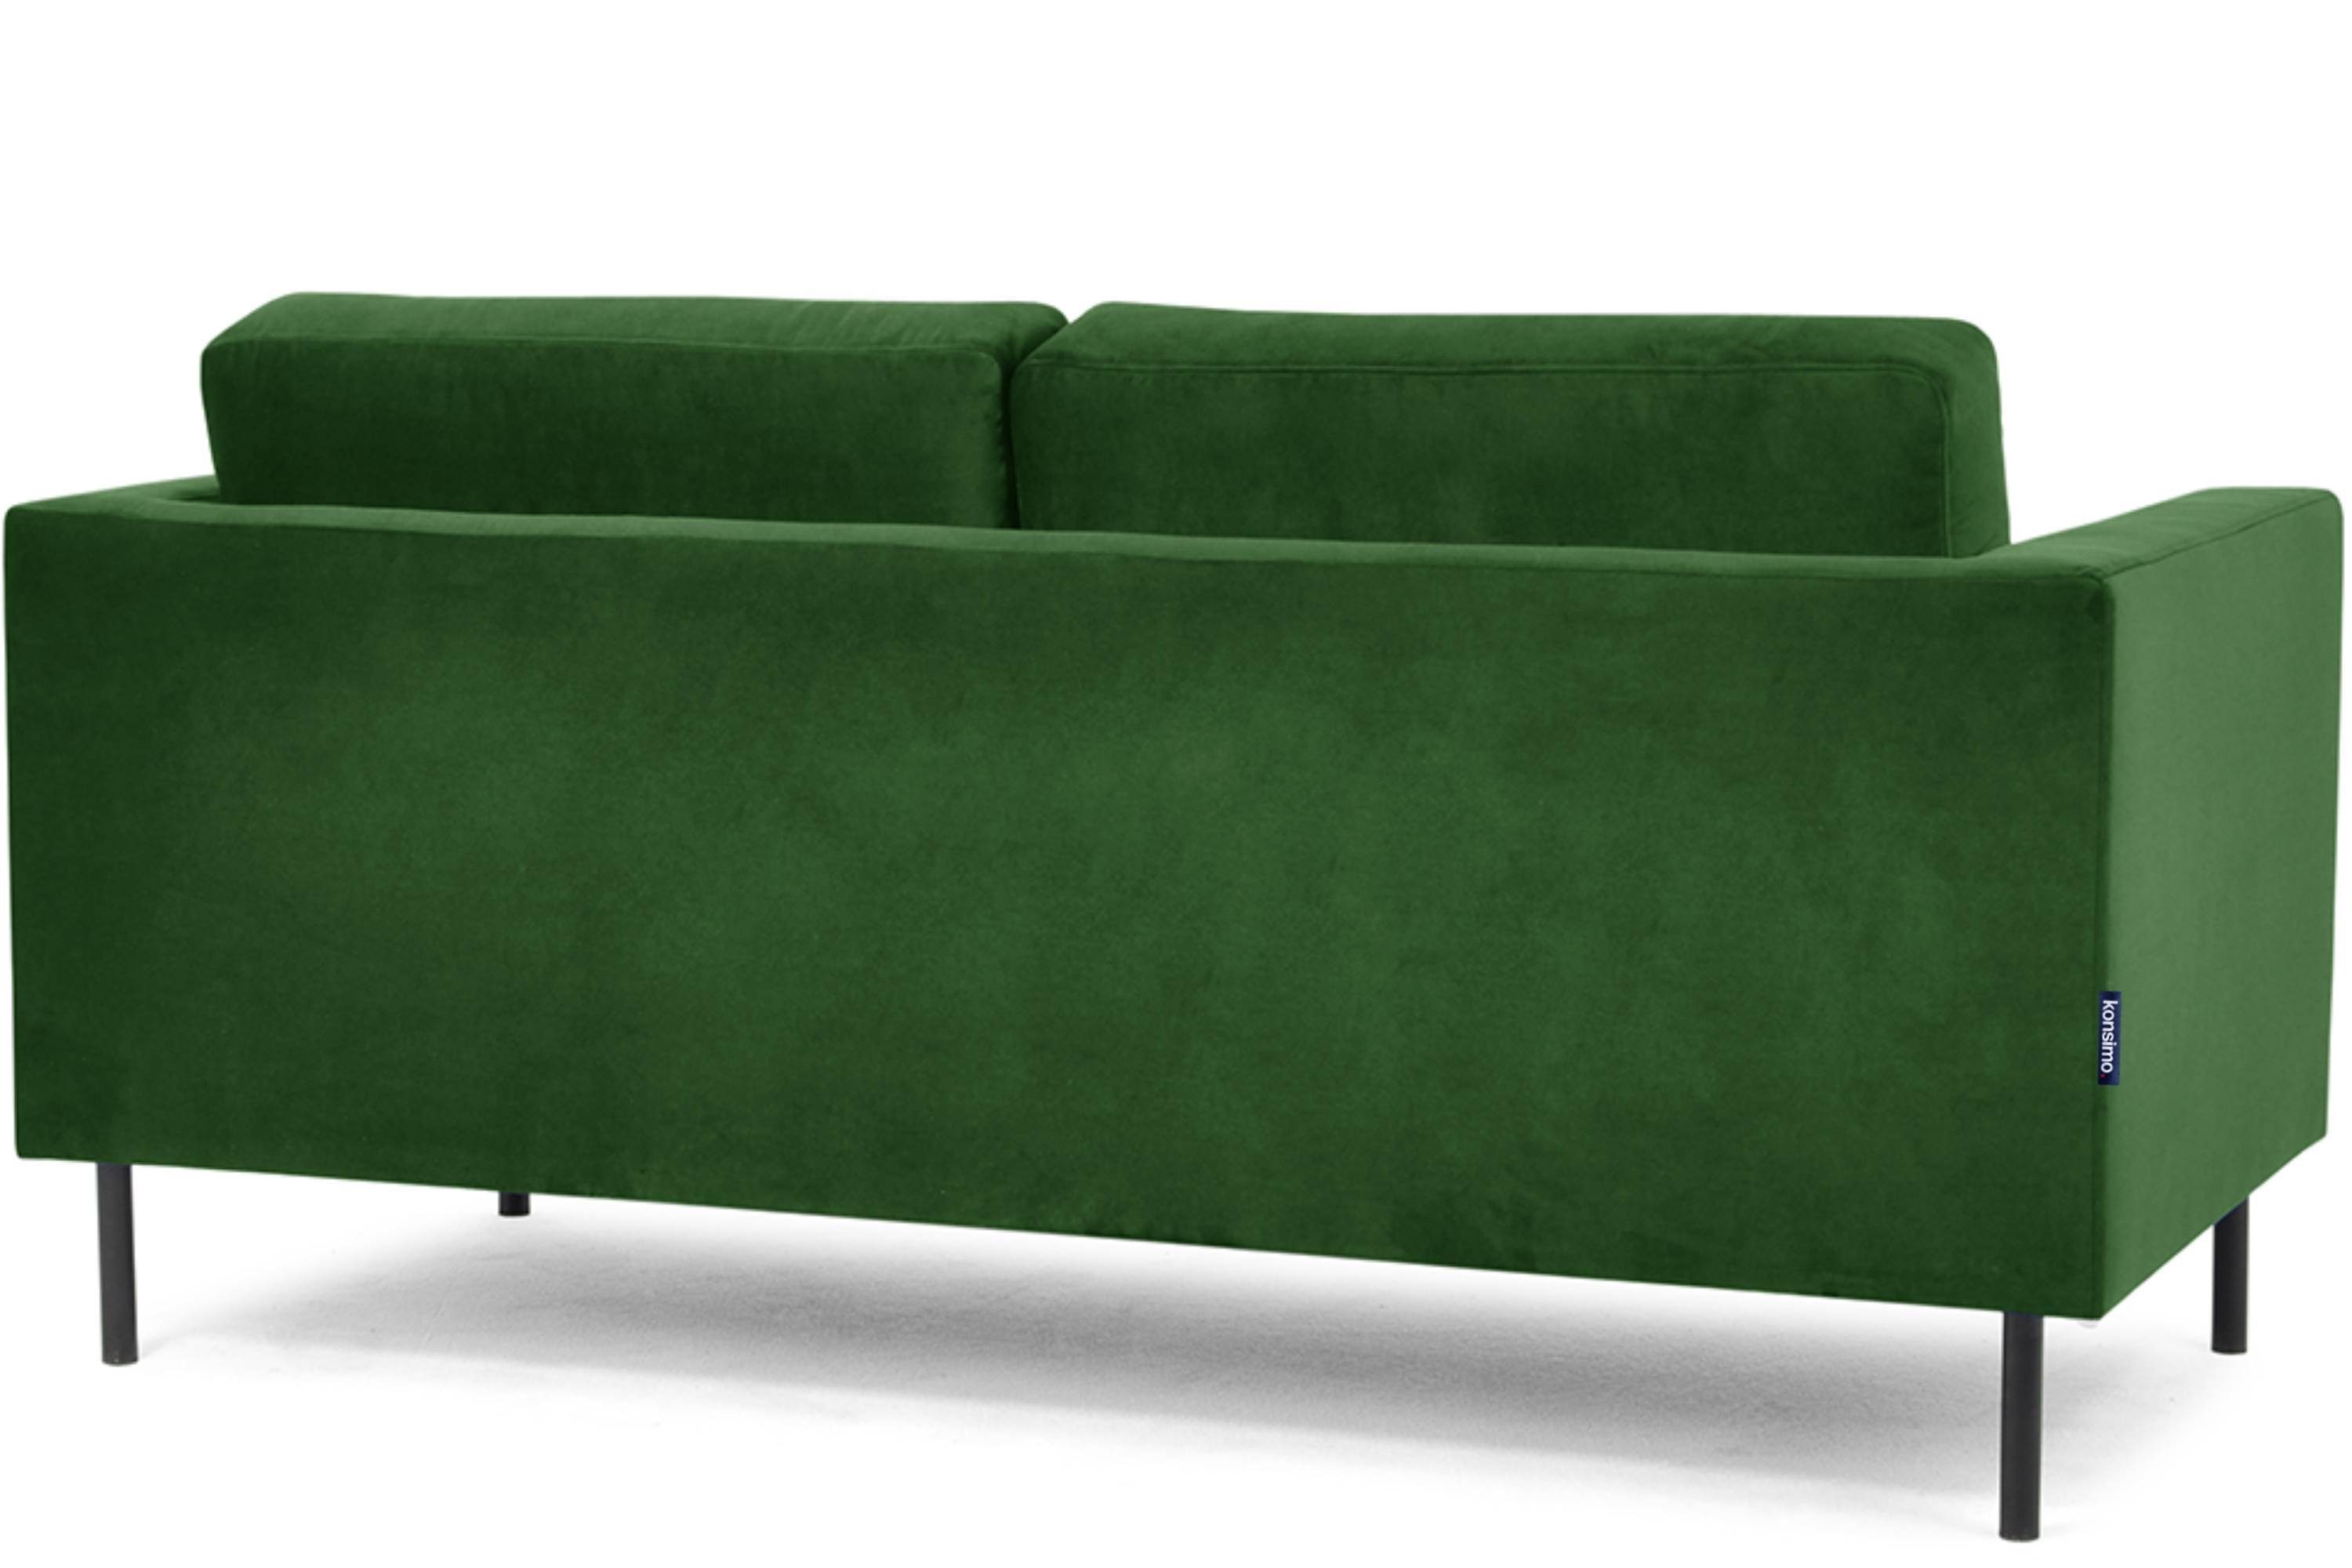 Konsimo 2-Sitzer TOZZI Personen, universelles Sofa grün Design grün Beine, hohe | | grün 2